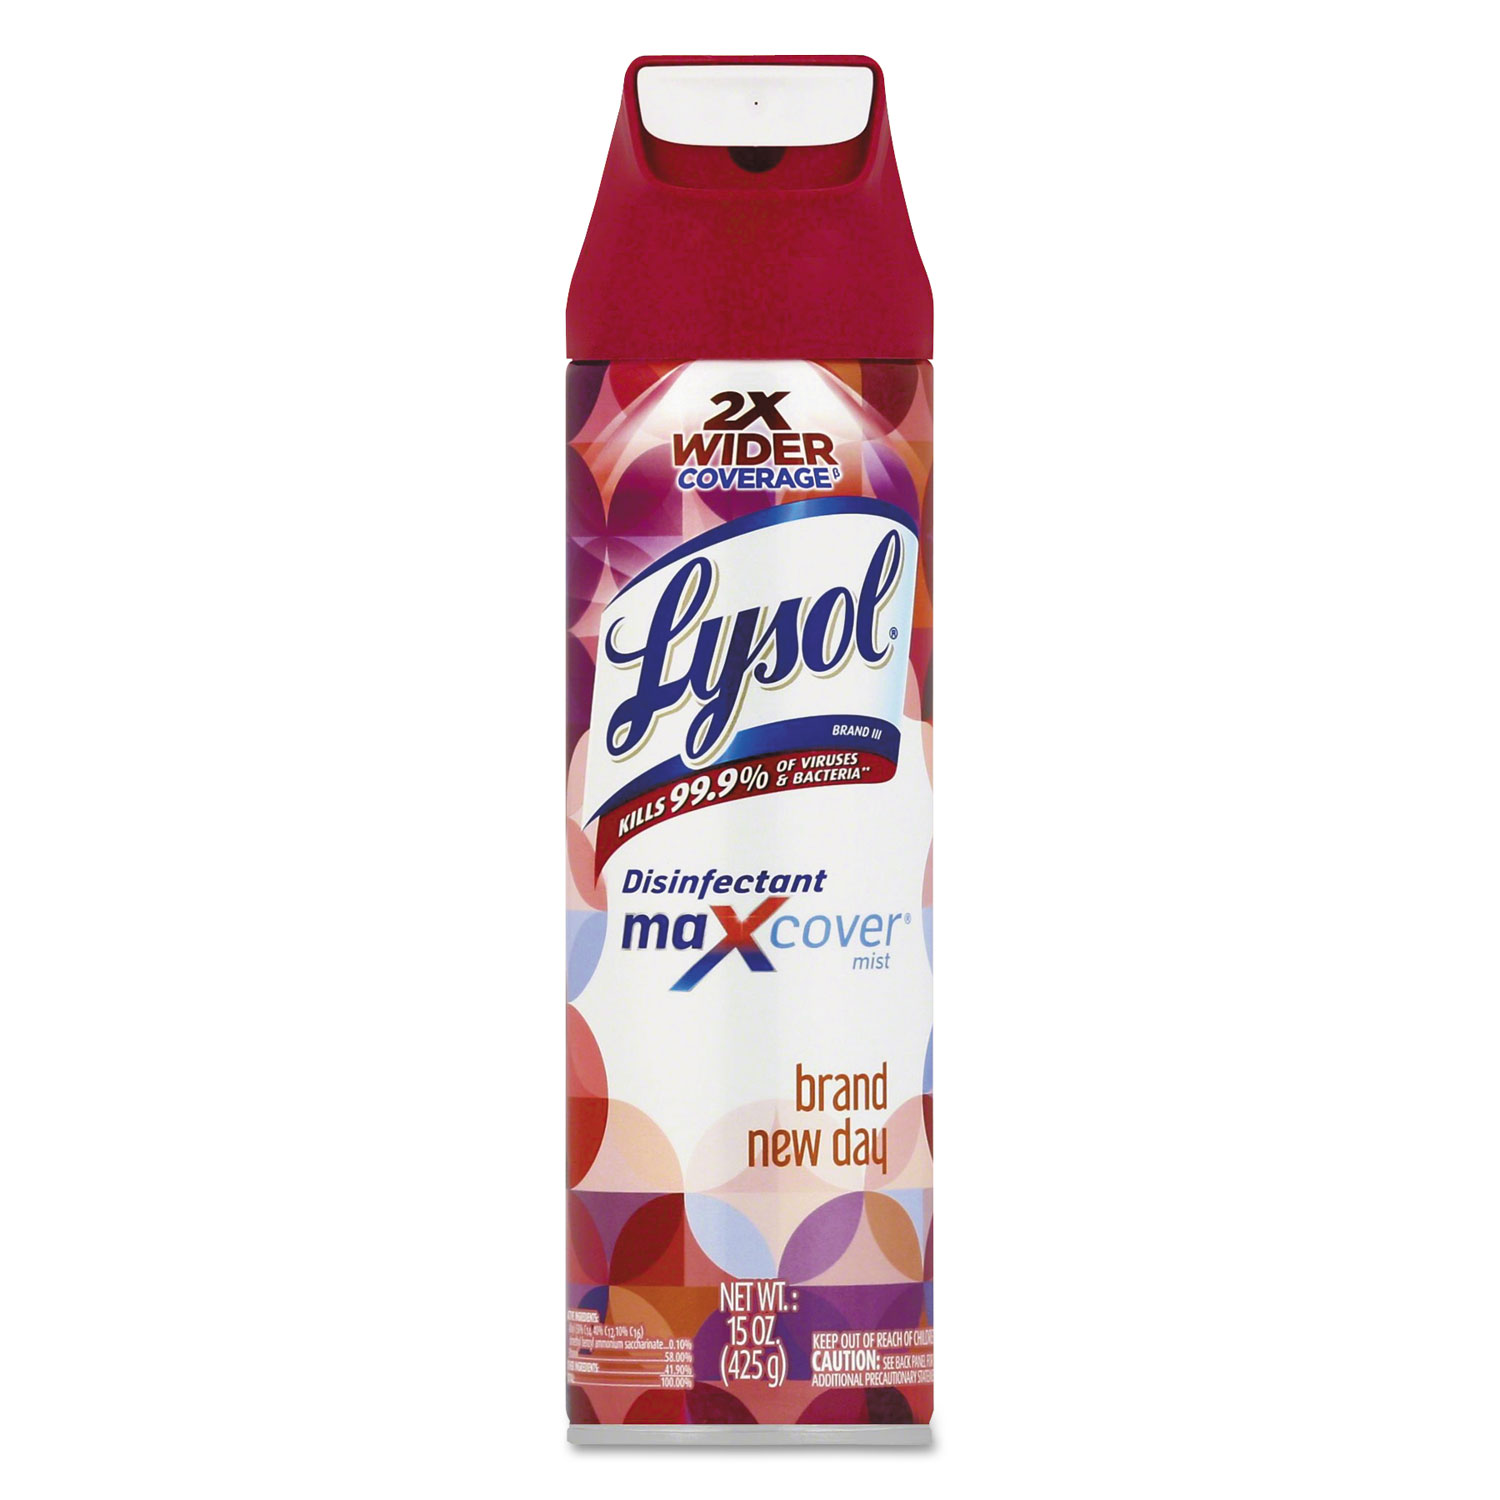  LYSOL Brand 19200-97171 Max Cover Disinfectant Mist, Liquid, Brand New Day, 15 oz, 6/Carton (RAC97171) 